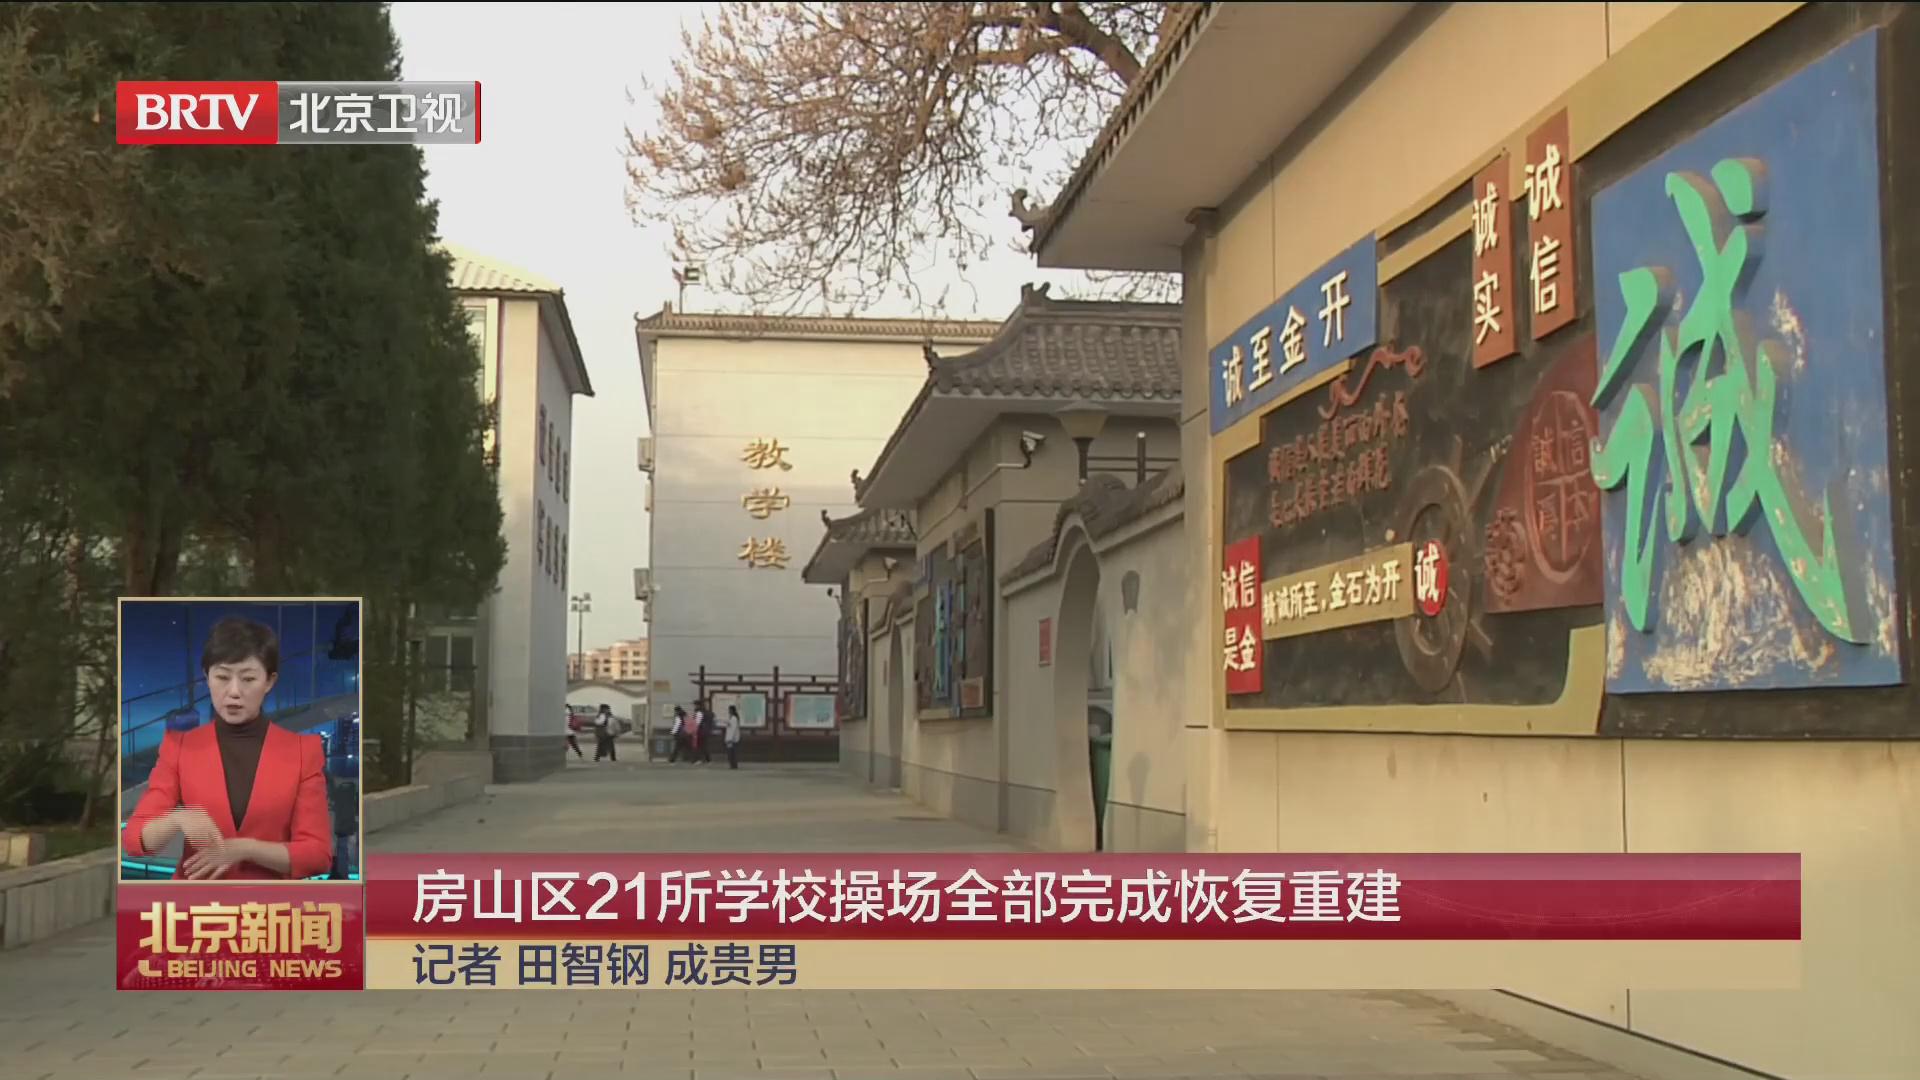 BTV《北京半岛在线注册·(中国)有限公司》——房山区21所学校操场全部完成恢复重建